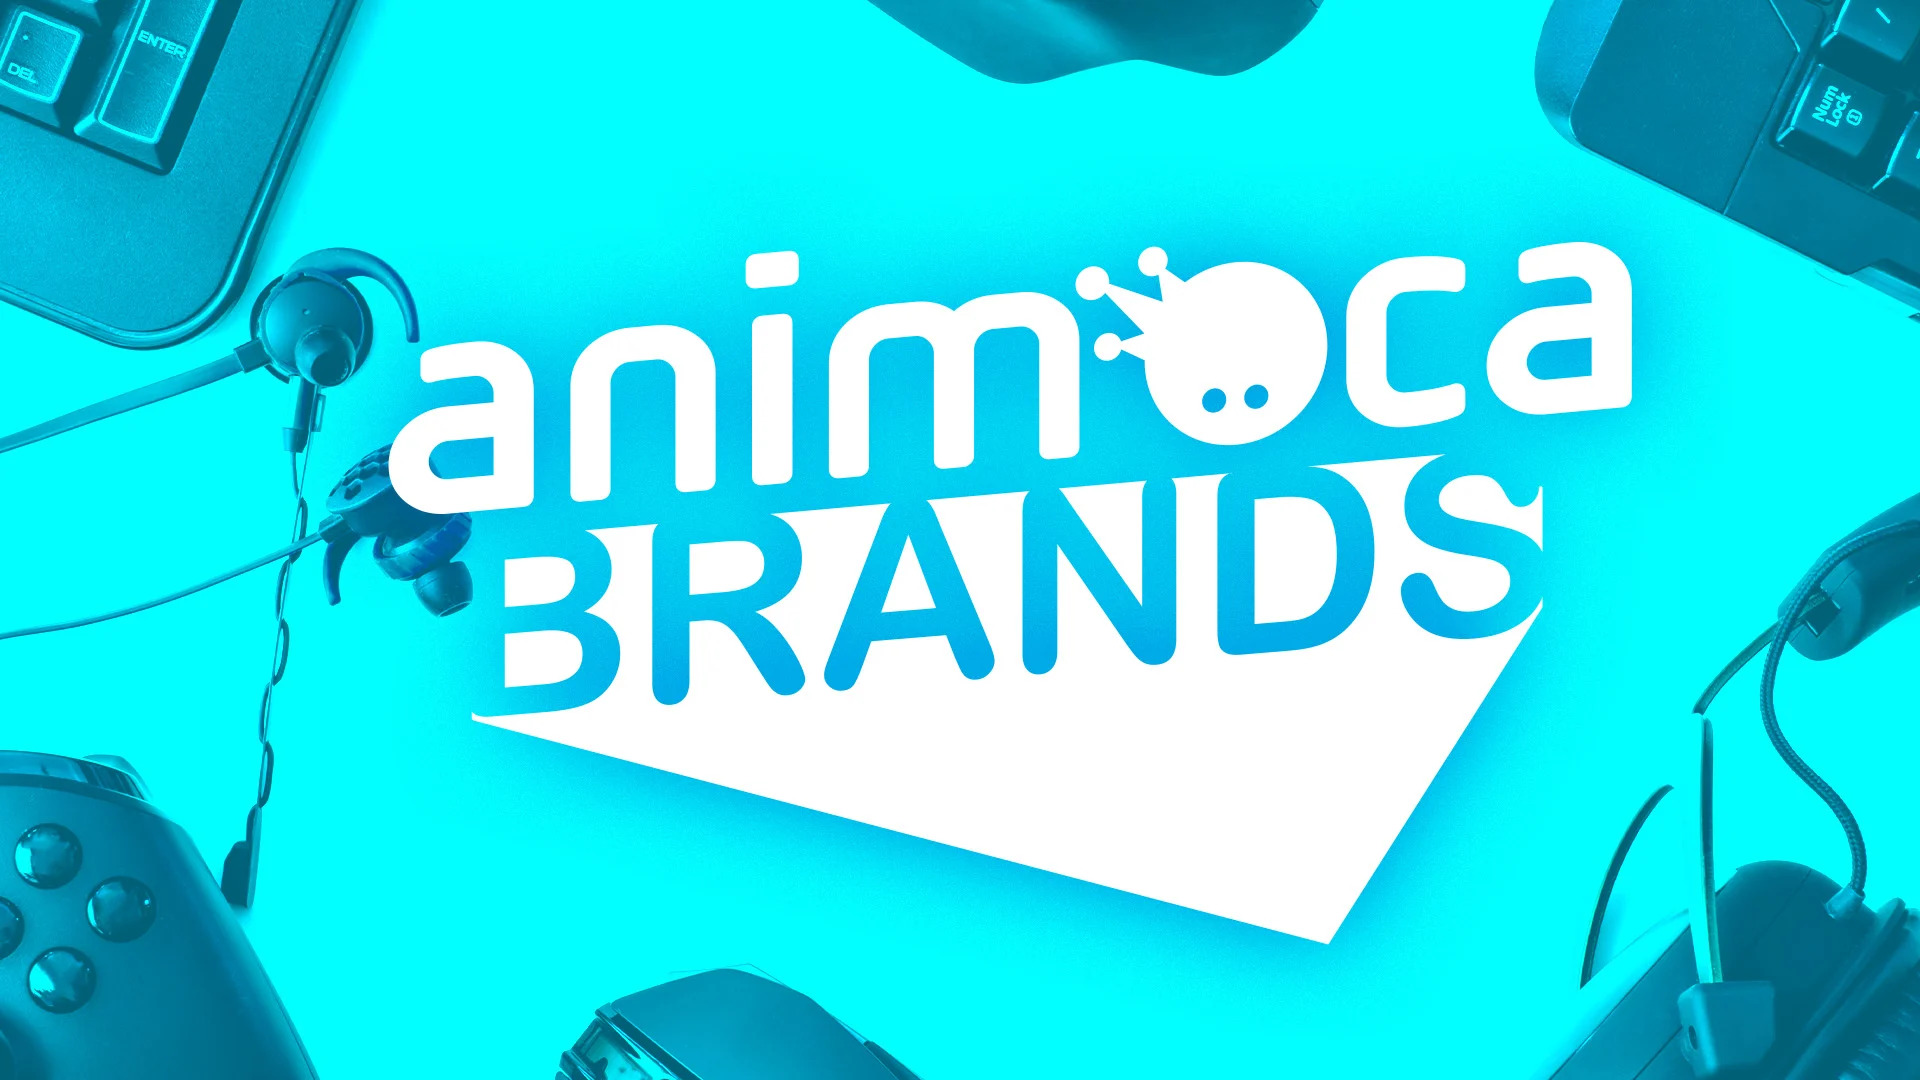 Animoca Brands raises $ 75 million at a valuation of $ 5.9 billion